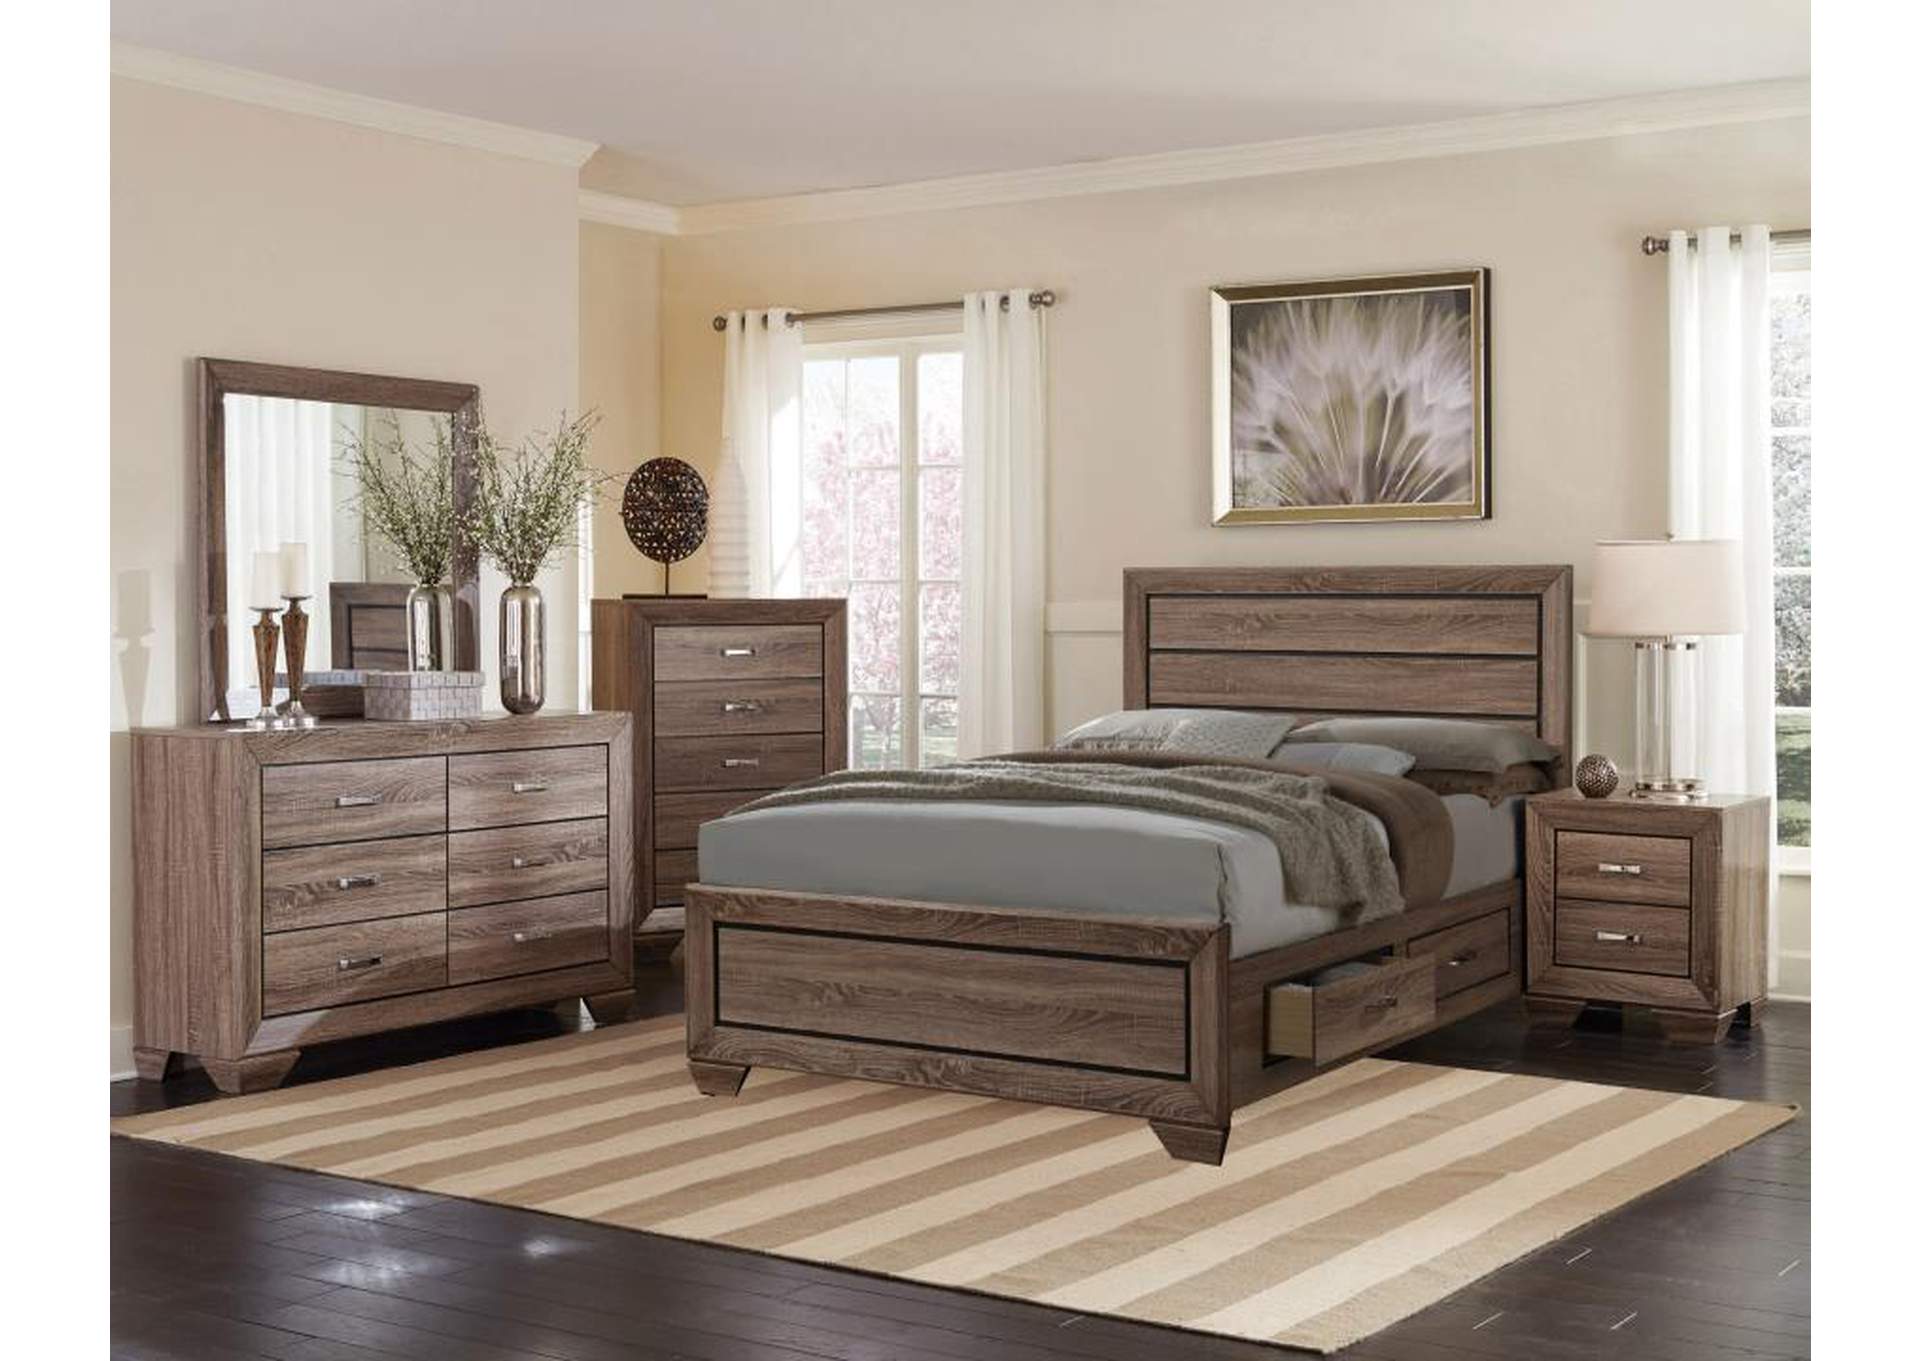 Kauffman Storage Bedroom Set With High Straight Headboard,Coaster Furniture